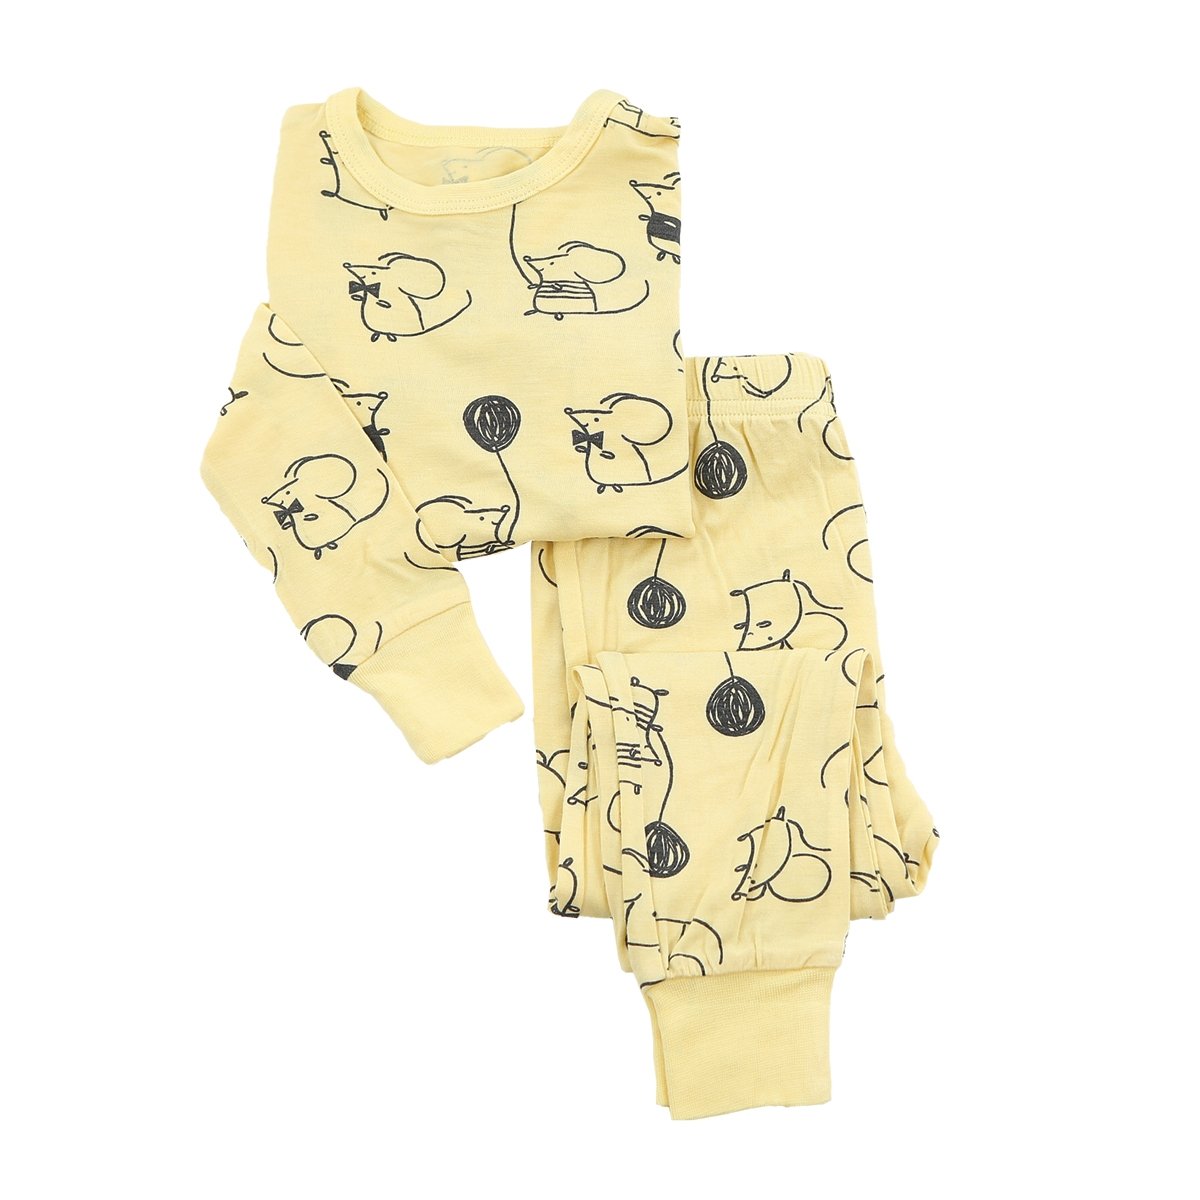 Silkberry Baby Bamboo Stardust Unicorn Printed Pajama Set